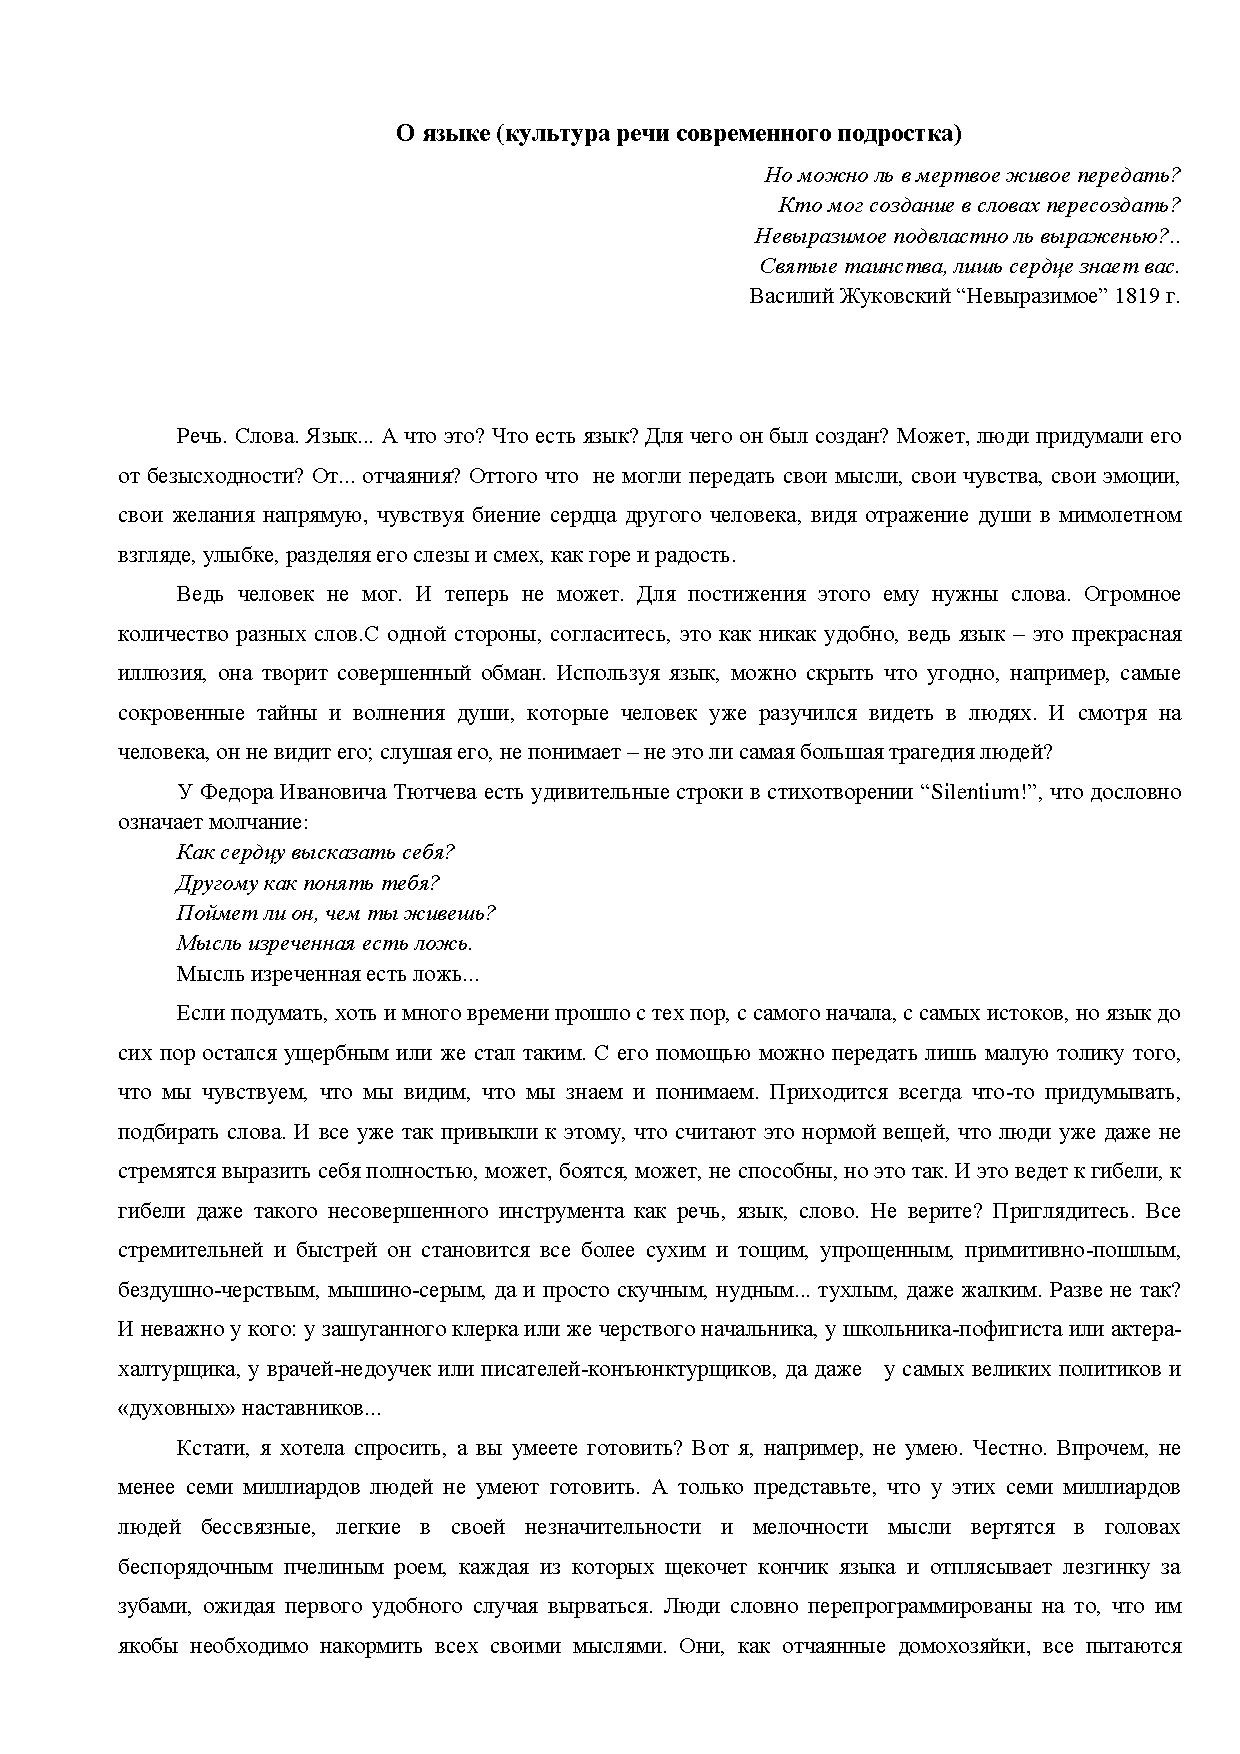 Шепелюк Таисия, О языке.pdf